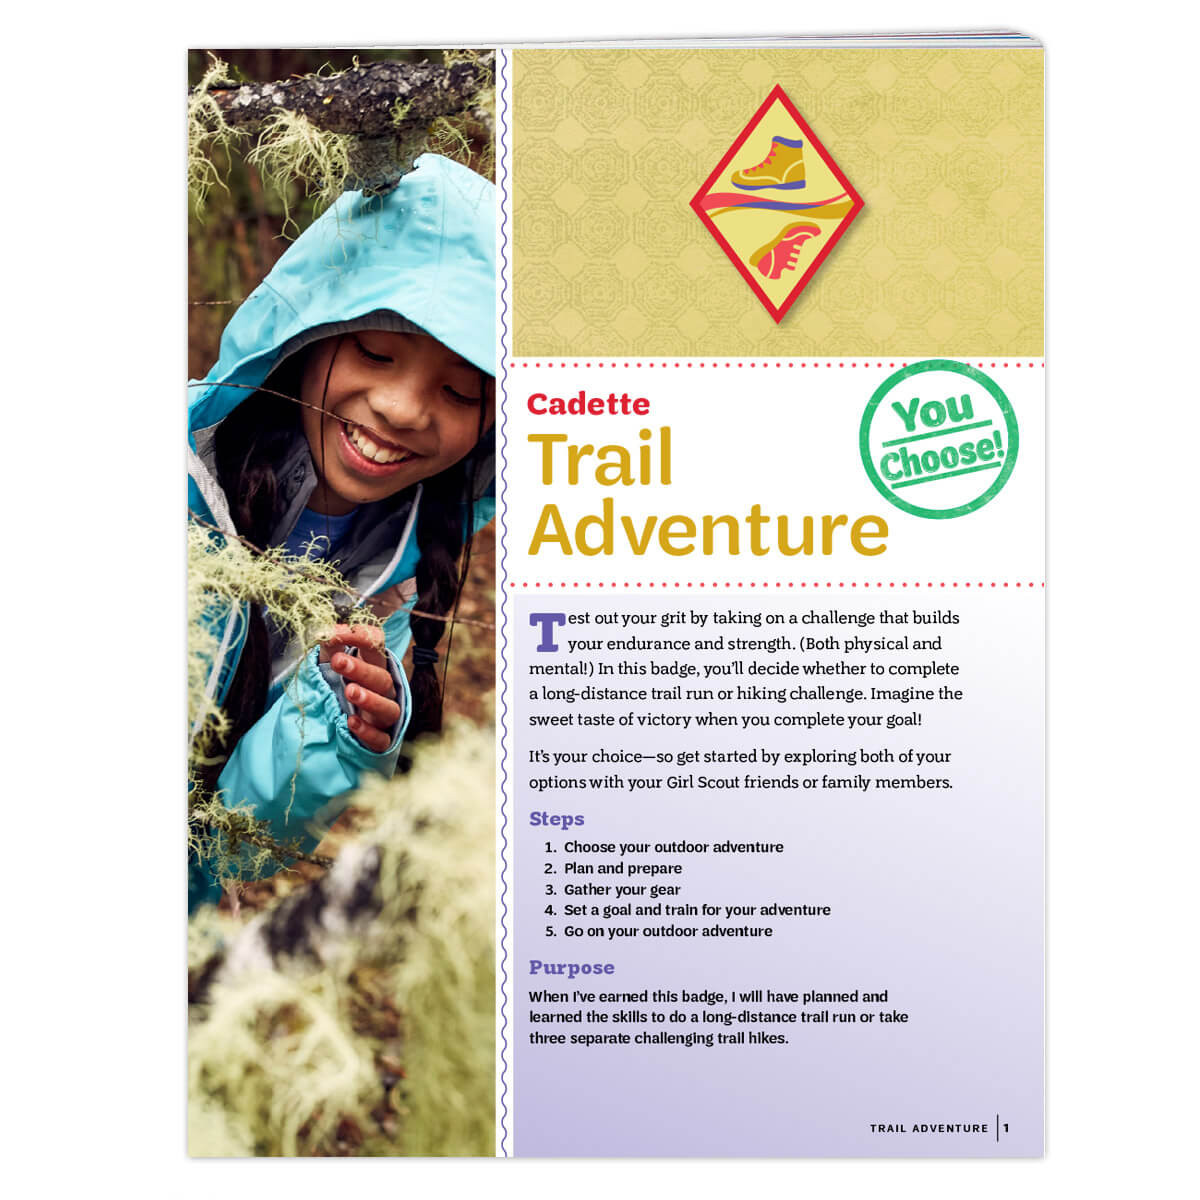 Cad. Trail Adventure REQ